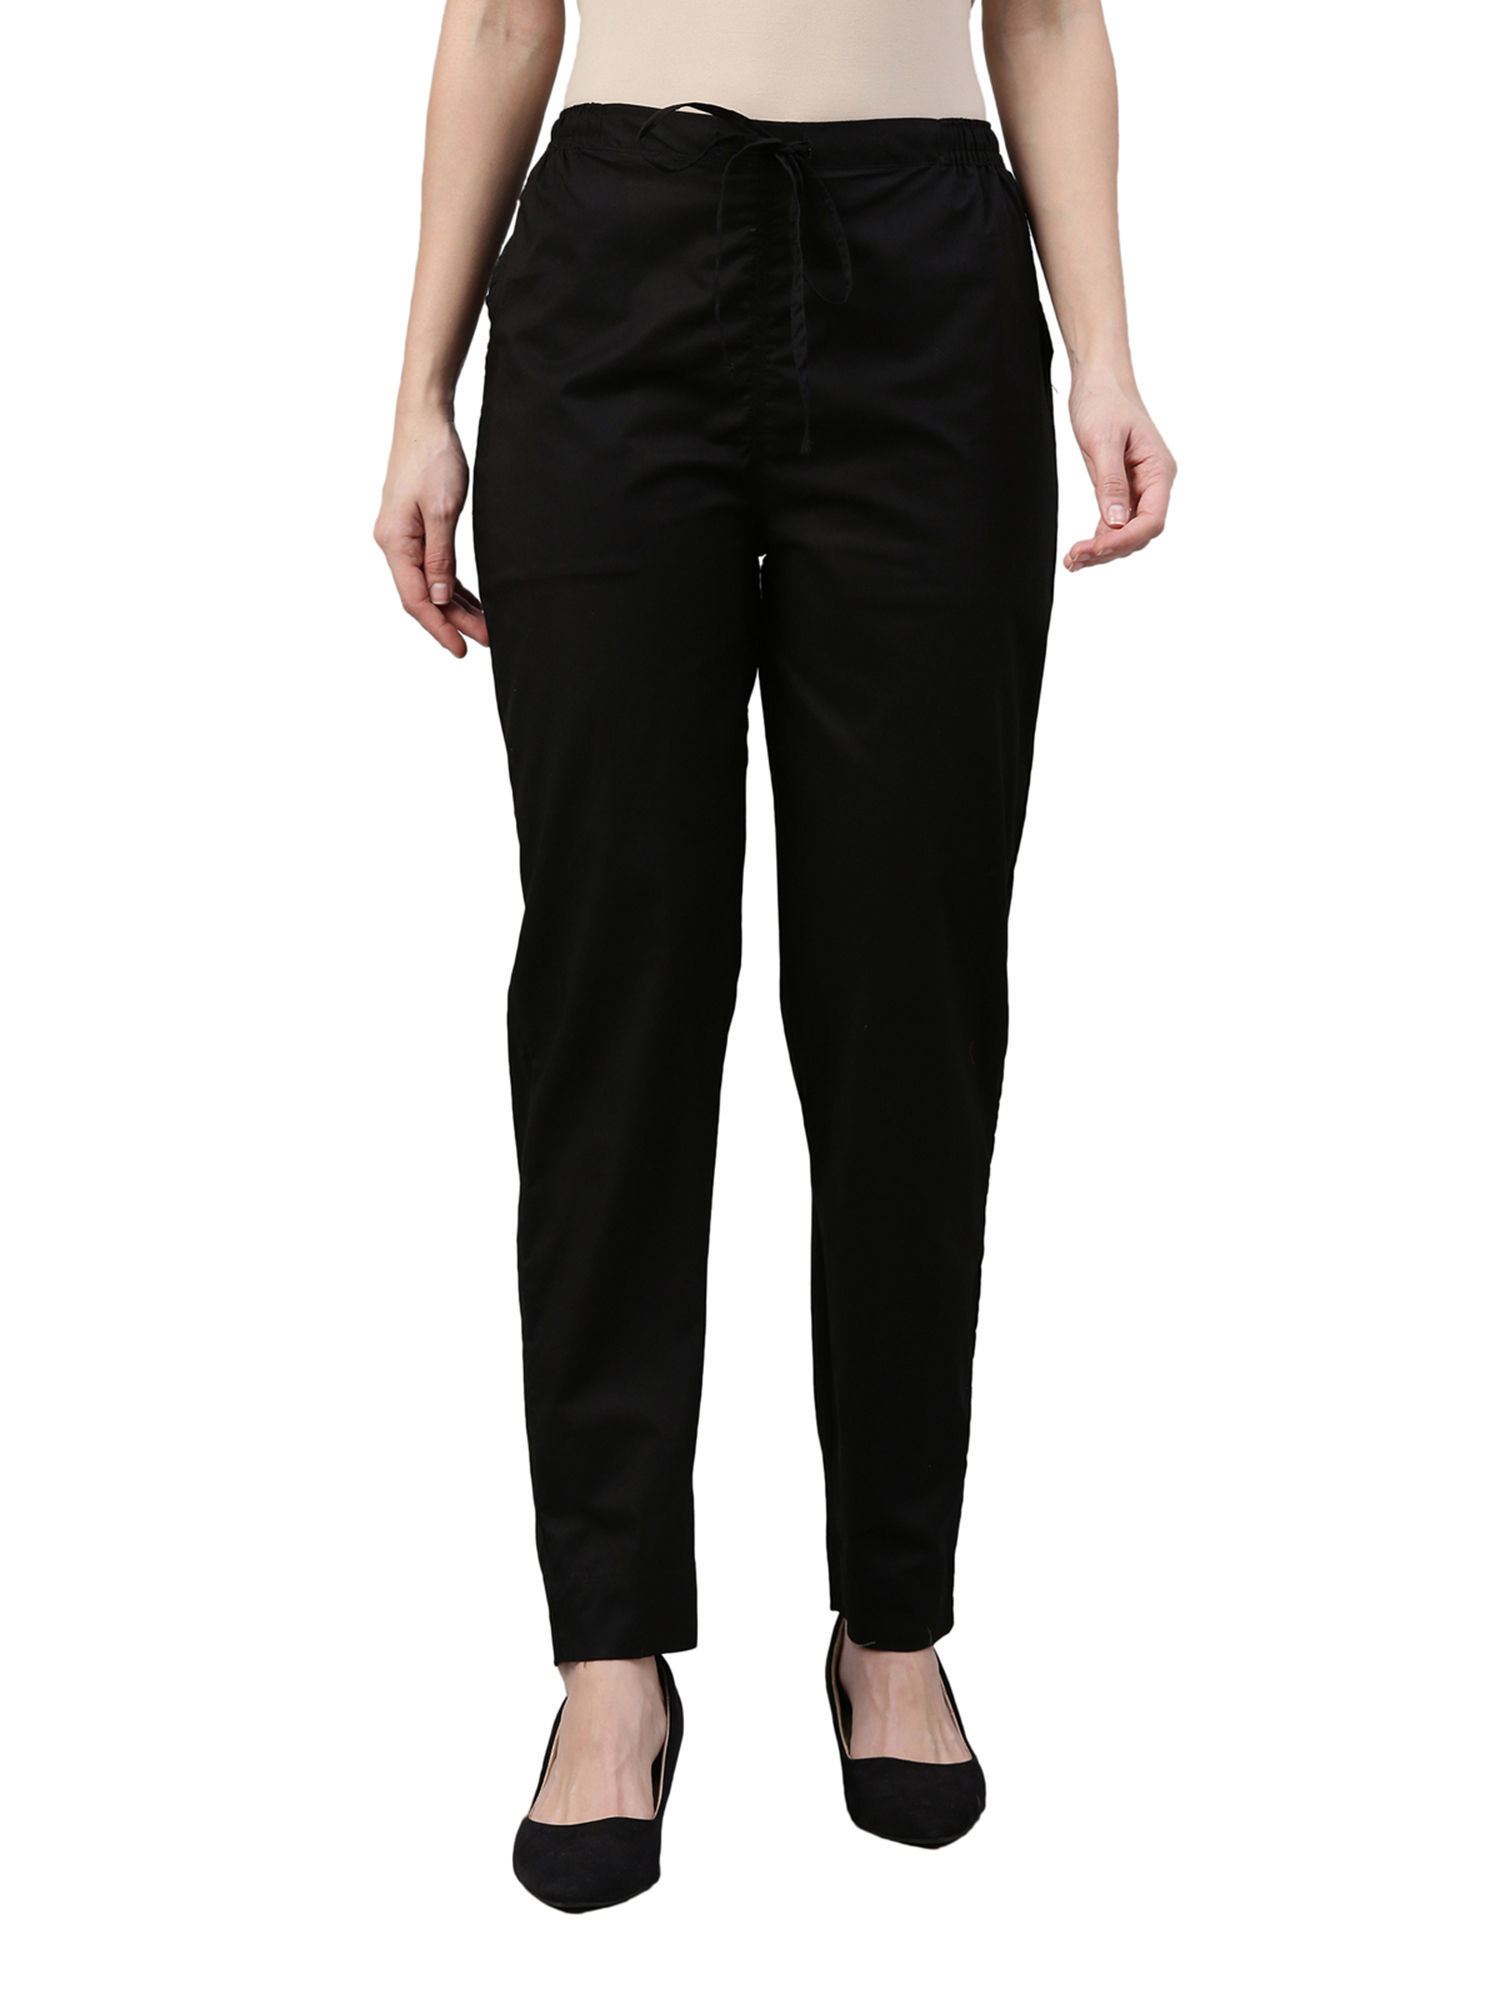 Buy Black Cotton Solid Capri Pant (Capri) for INR399.50 | Biba India